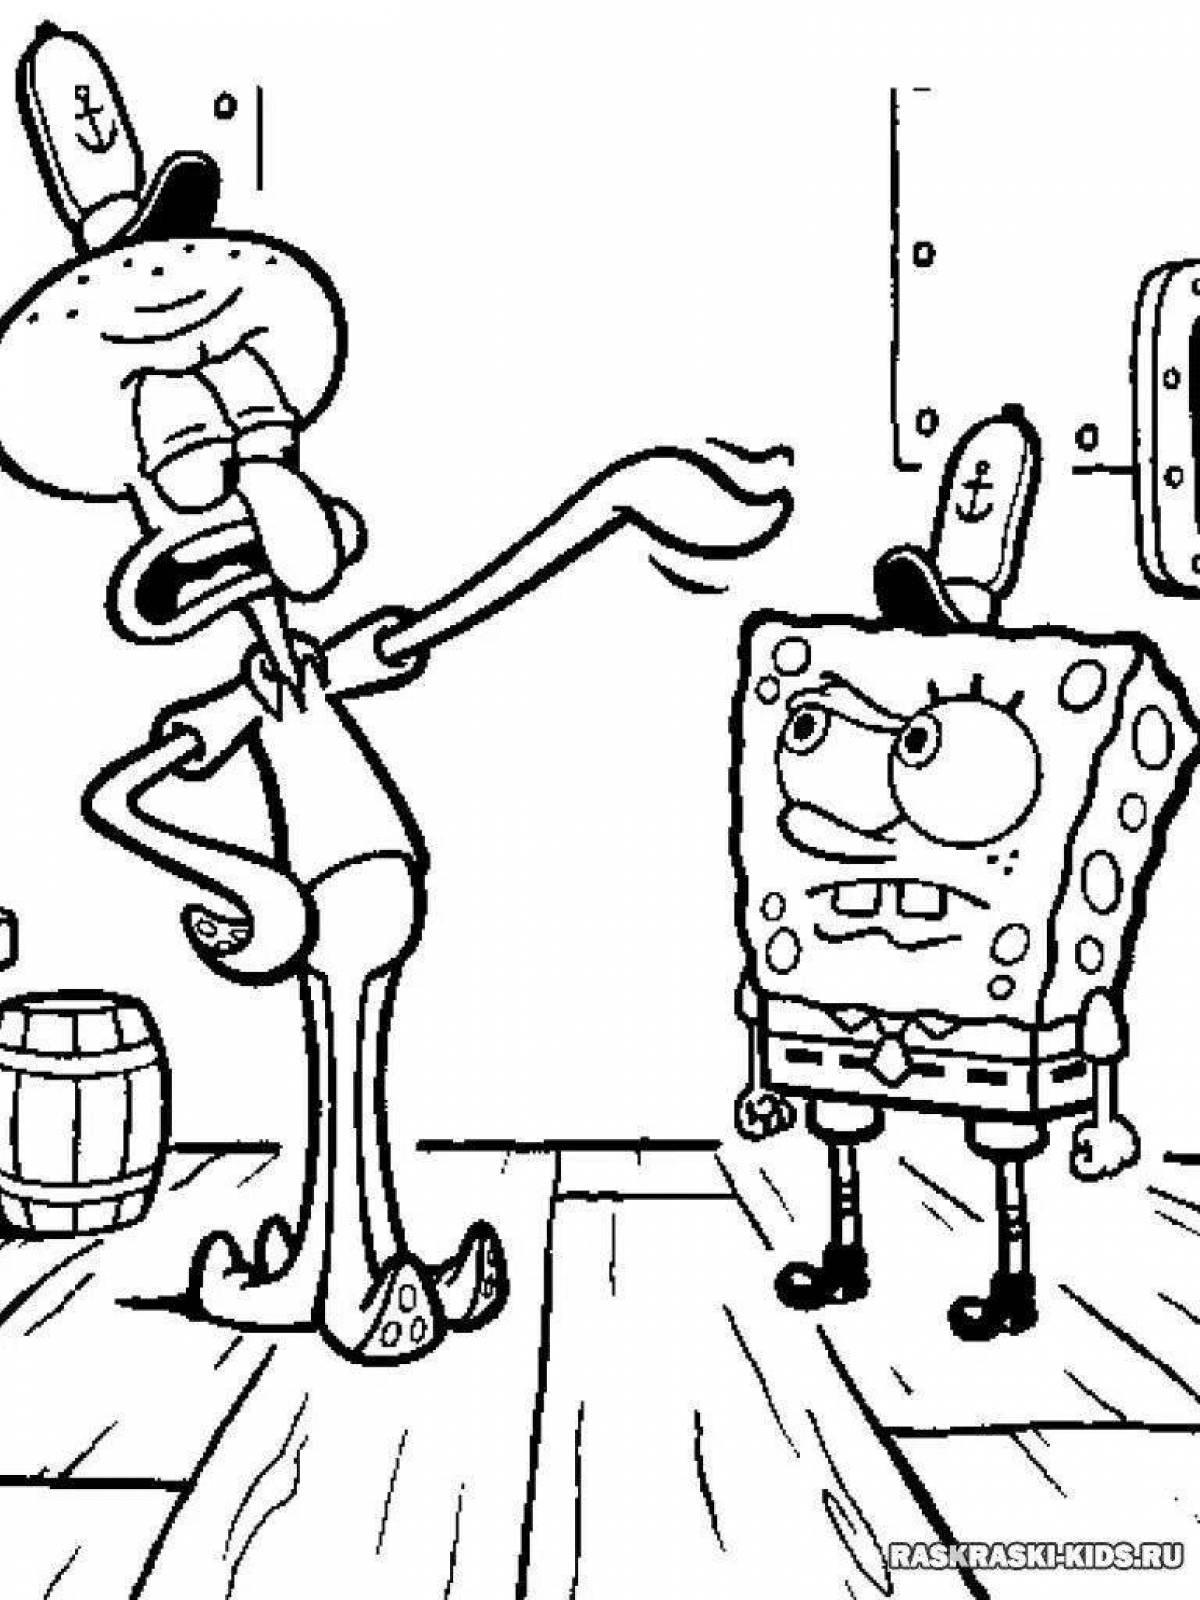 Spongebob and friends #10